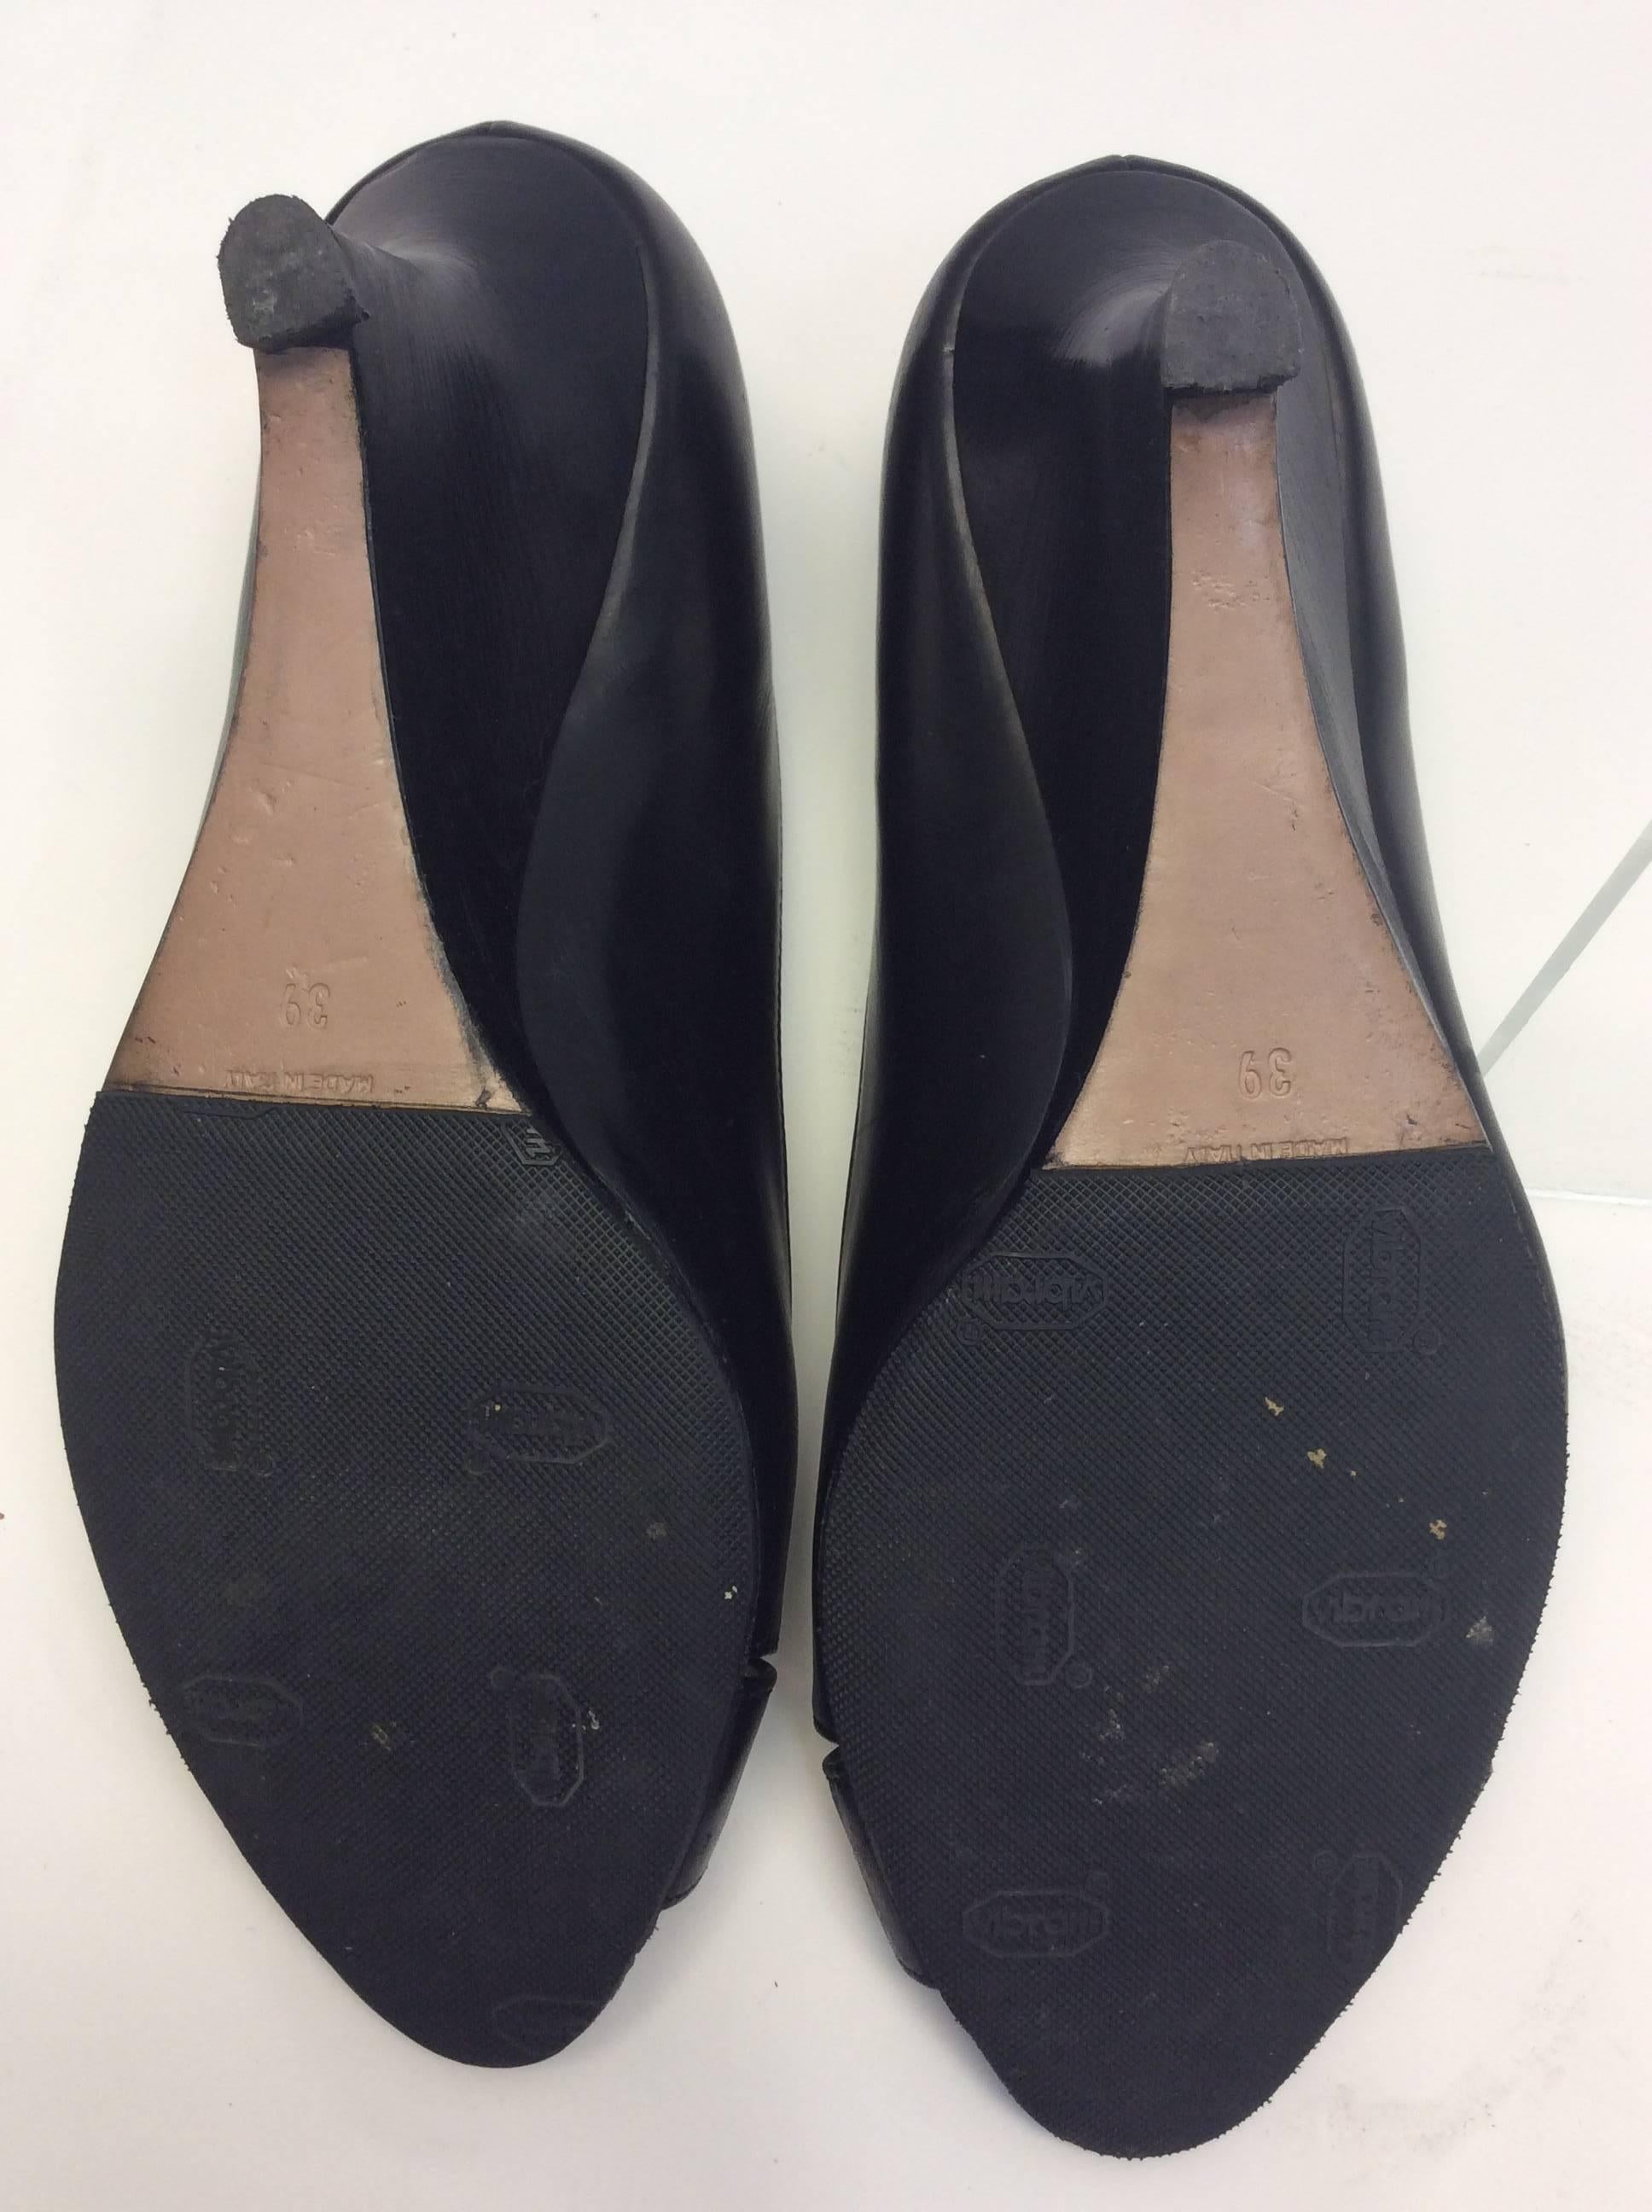 Prada Black Leather Peep Toe Wedge For Sale 3